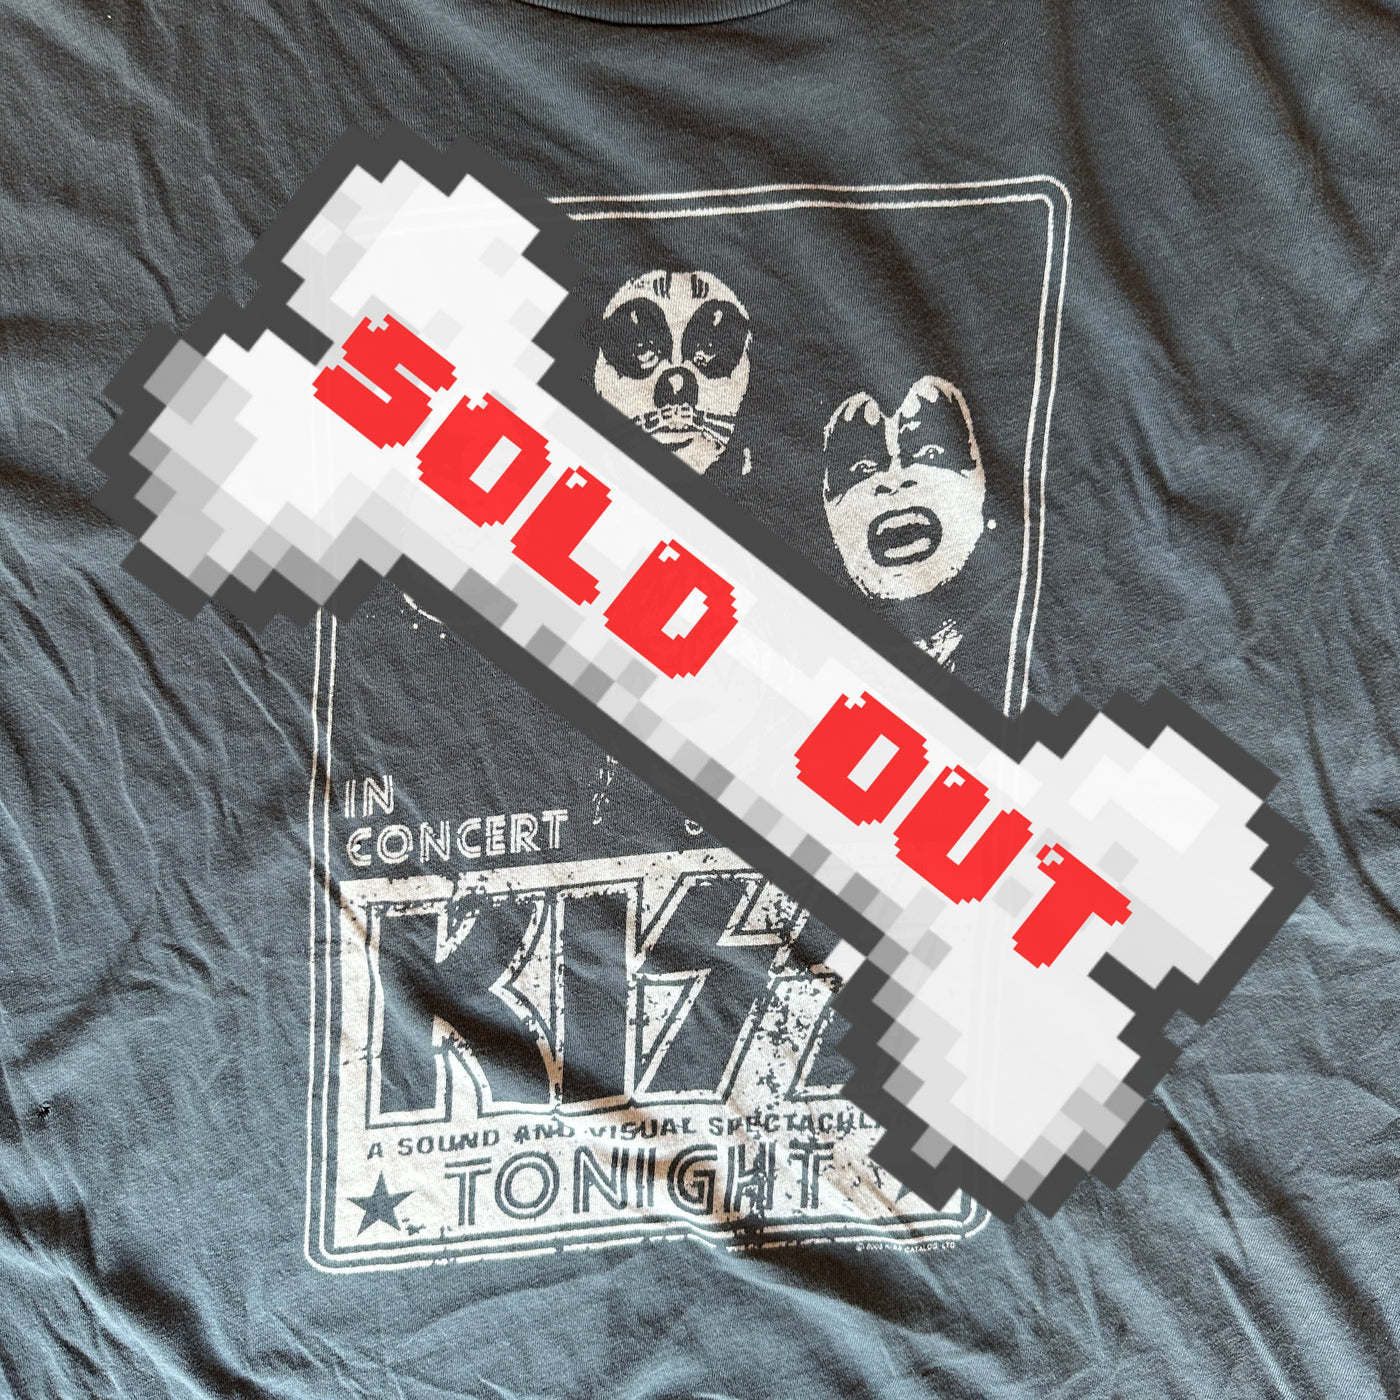 2004 Dark Grey “Kiss in Concert” Band T-Shirt